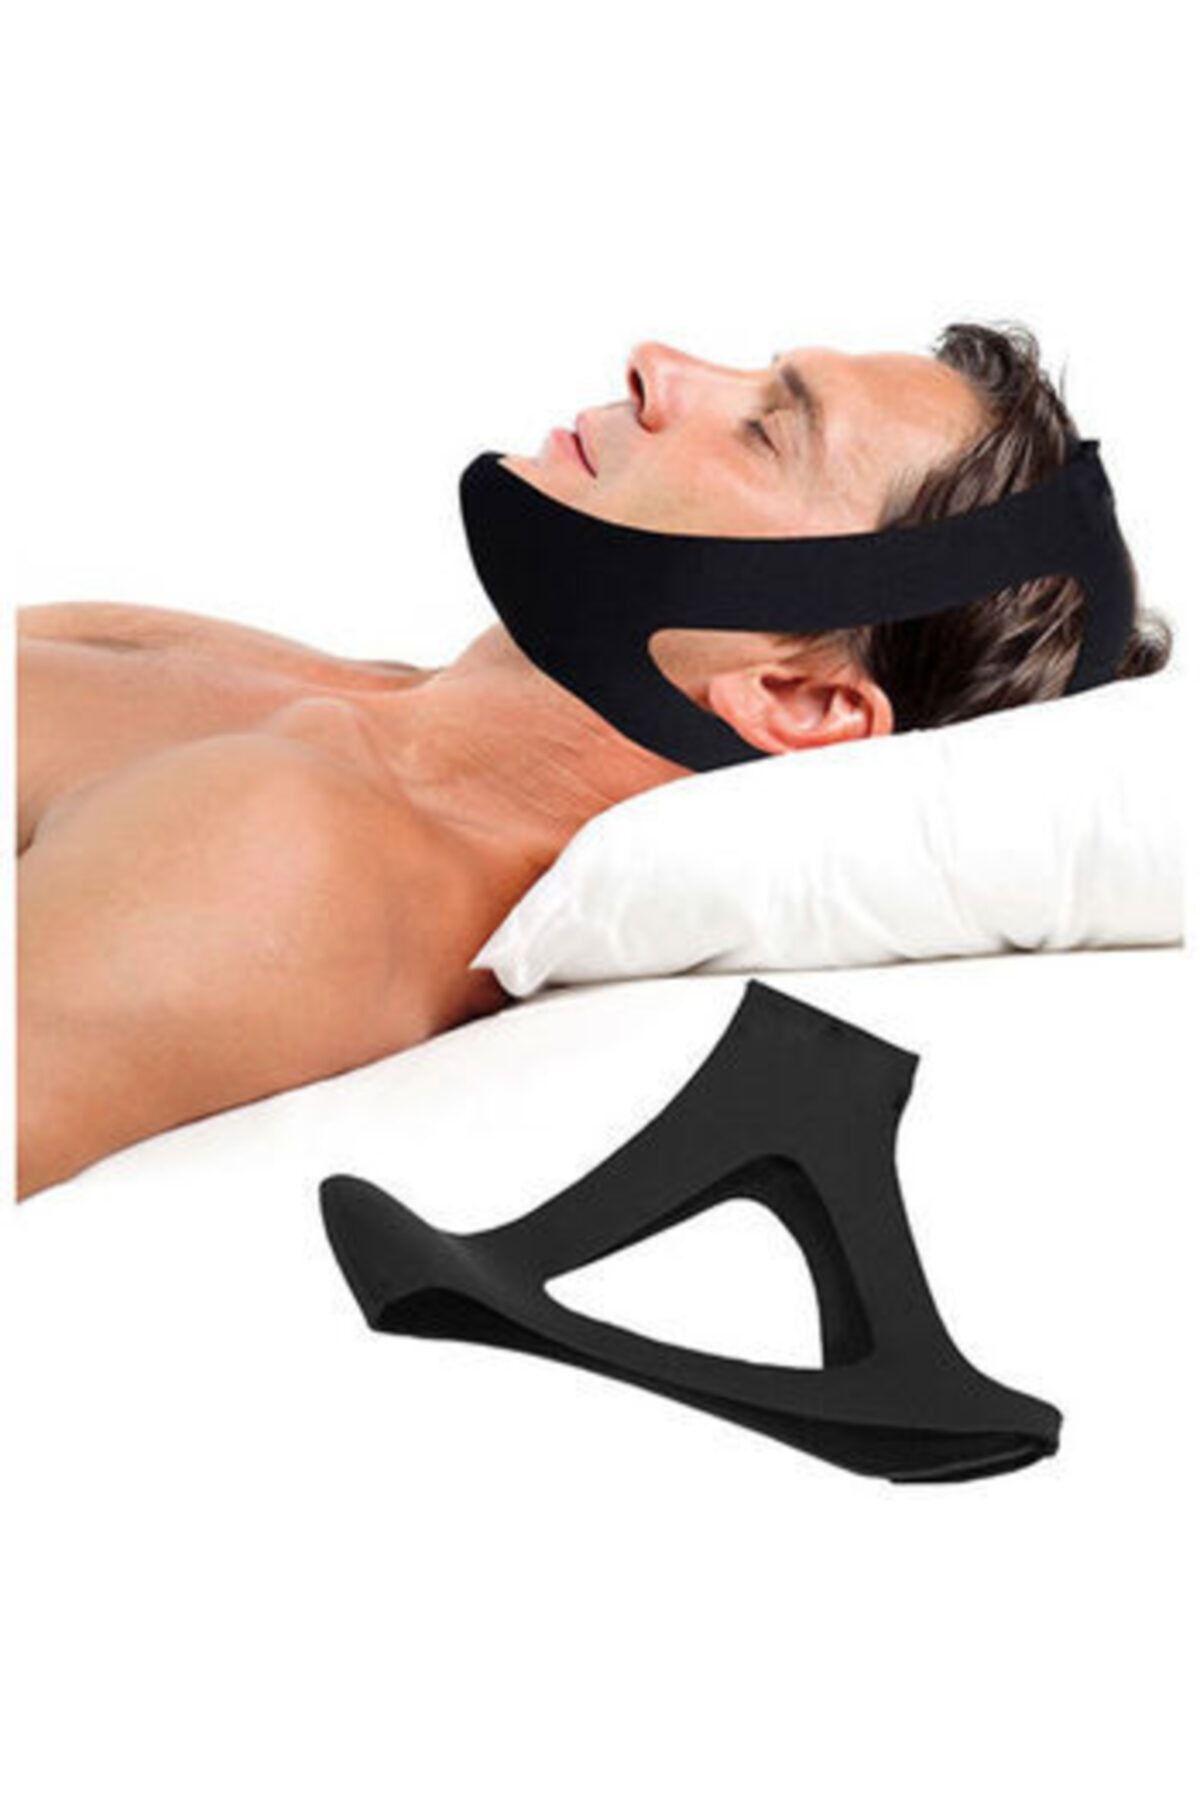 Ankaflex Horlama Önleyici Uyku Maskesi Horlama Protezi Horlama Bandı Maske Kemer Horlama Aparatı